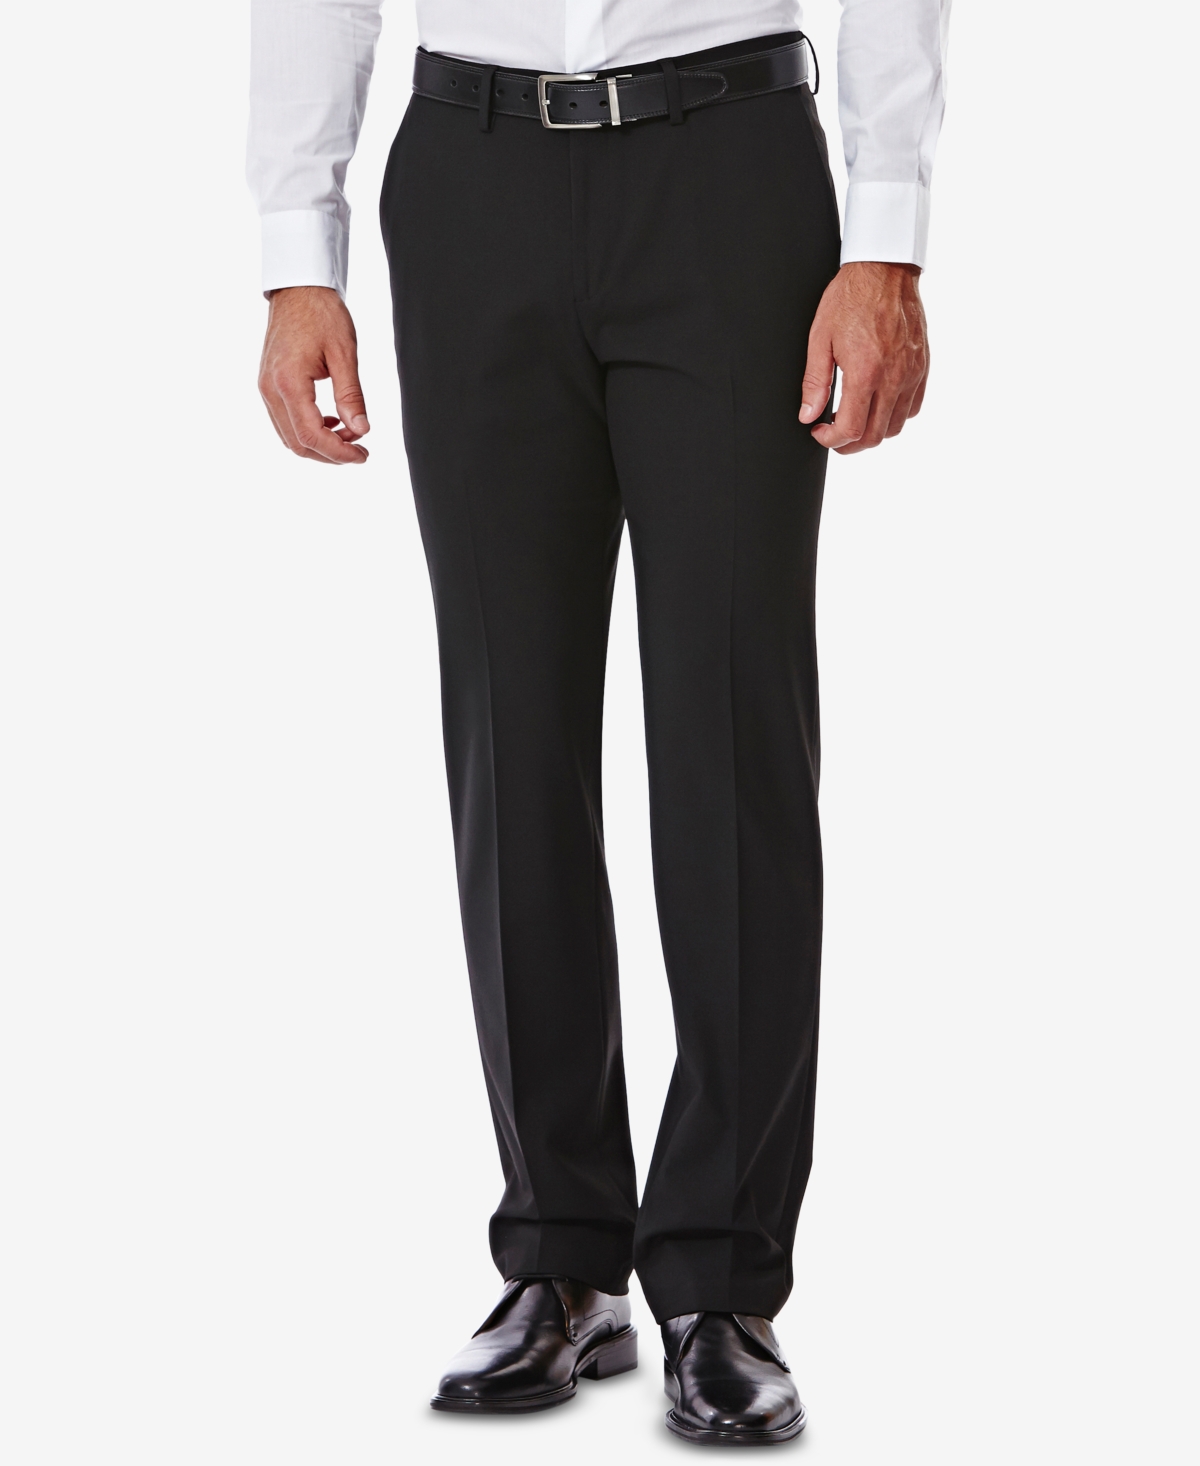 J.m. Haggar Men's Slim-Fit 4-Way Stretch Suit Pants - Black